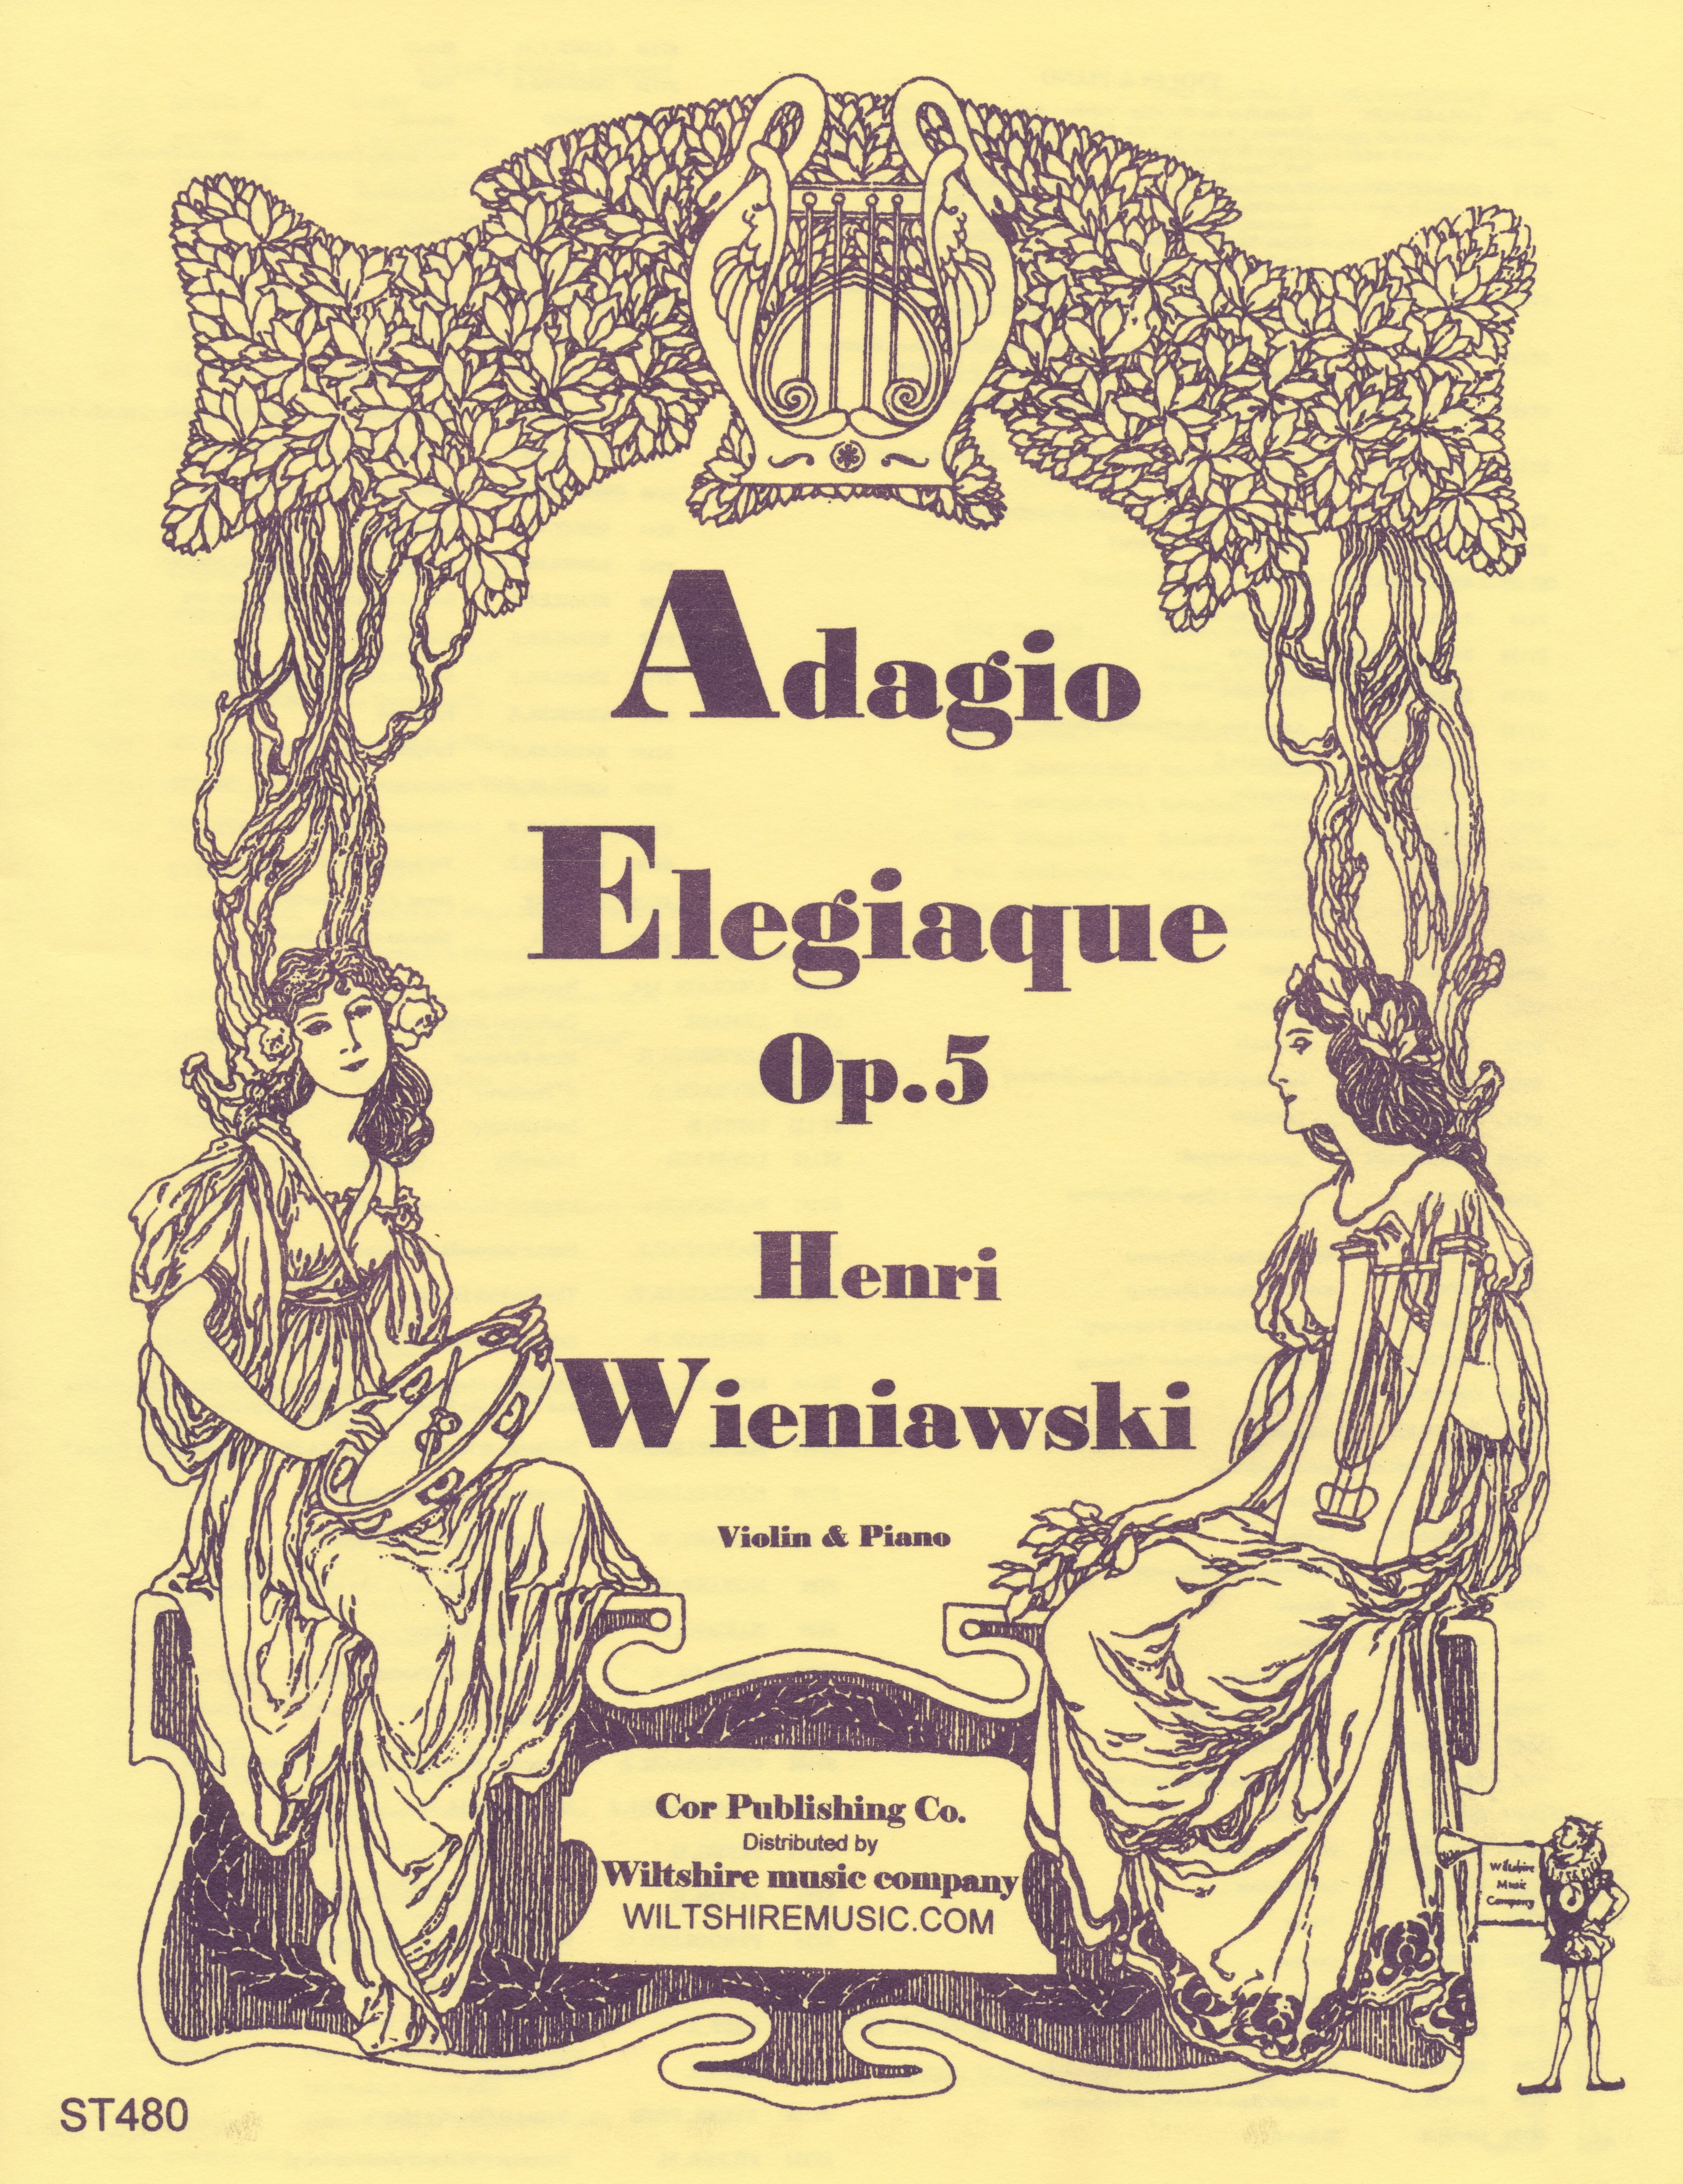 Adagio Elegiaque, Op.5, Henri Wieniawski, violin & piano